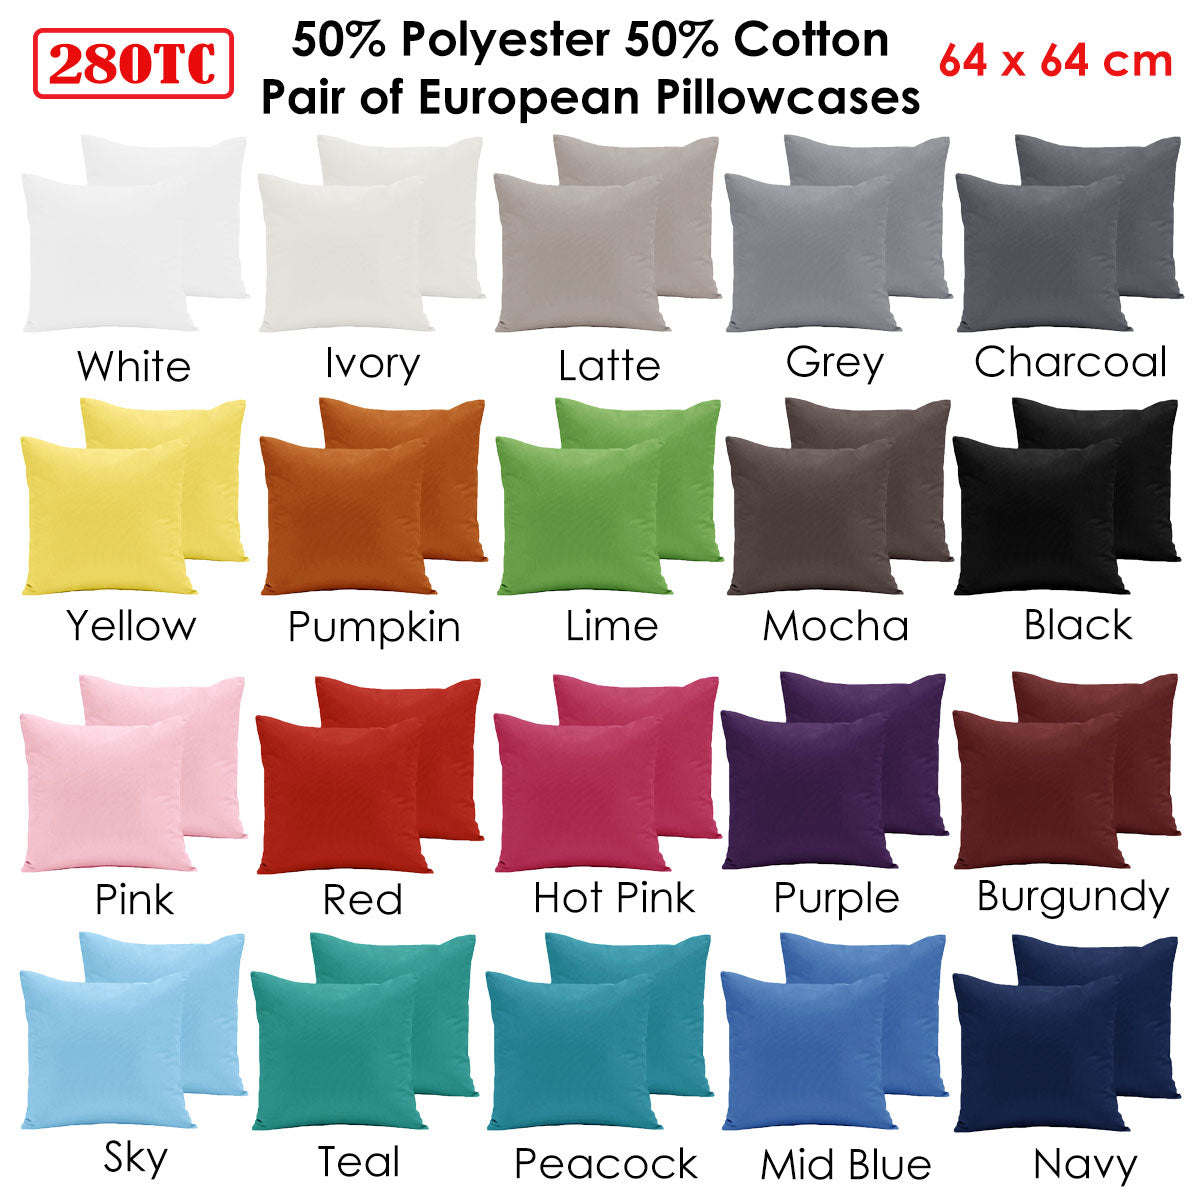 Pair of  280TC Polyester Cotton European Pillowcases Mid Blue